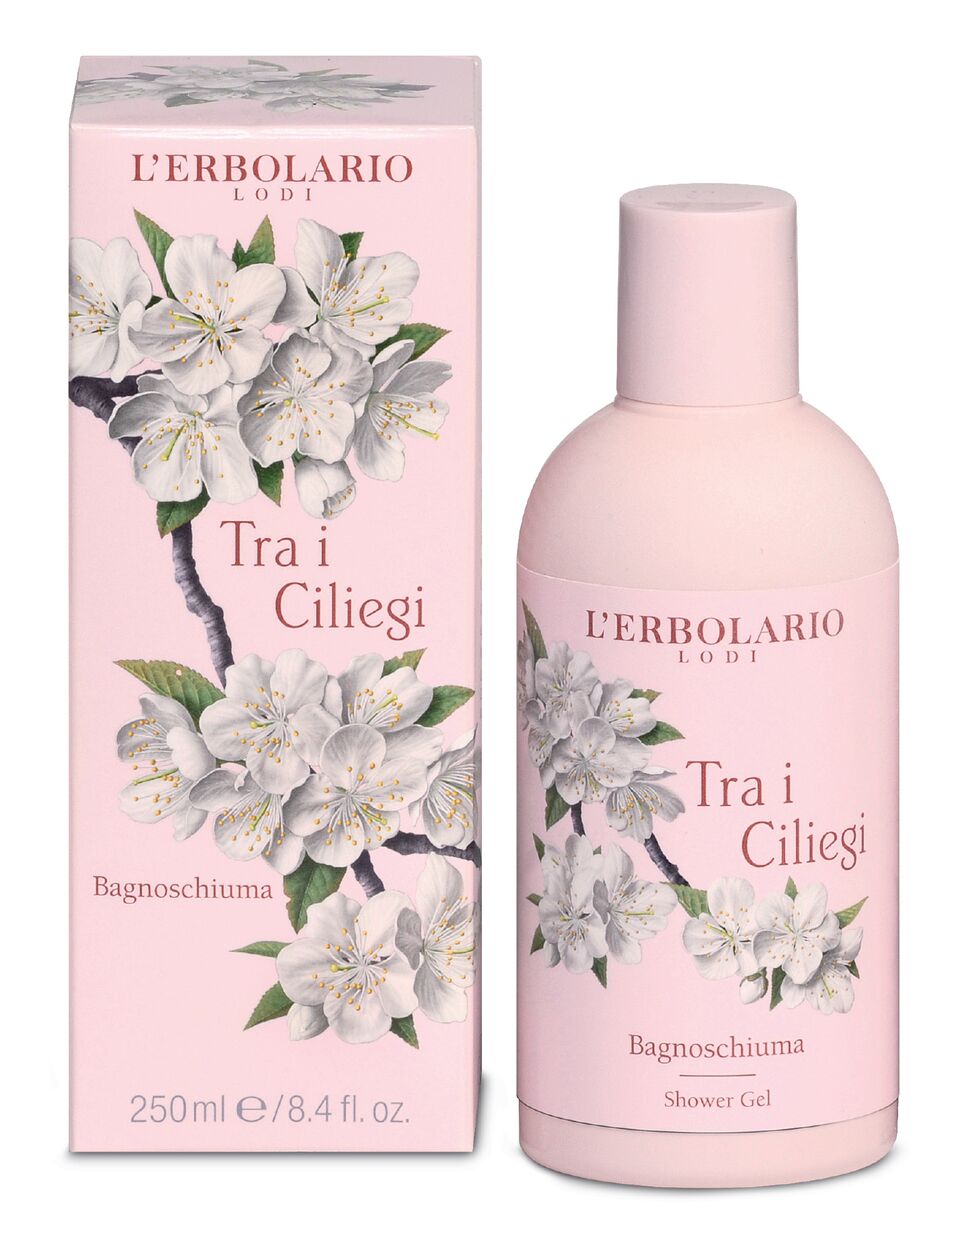 L’erbolario Shower Gel with Cherry Blossom & Italian Cherry Extract